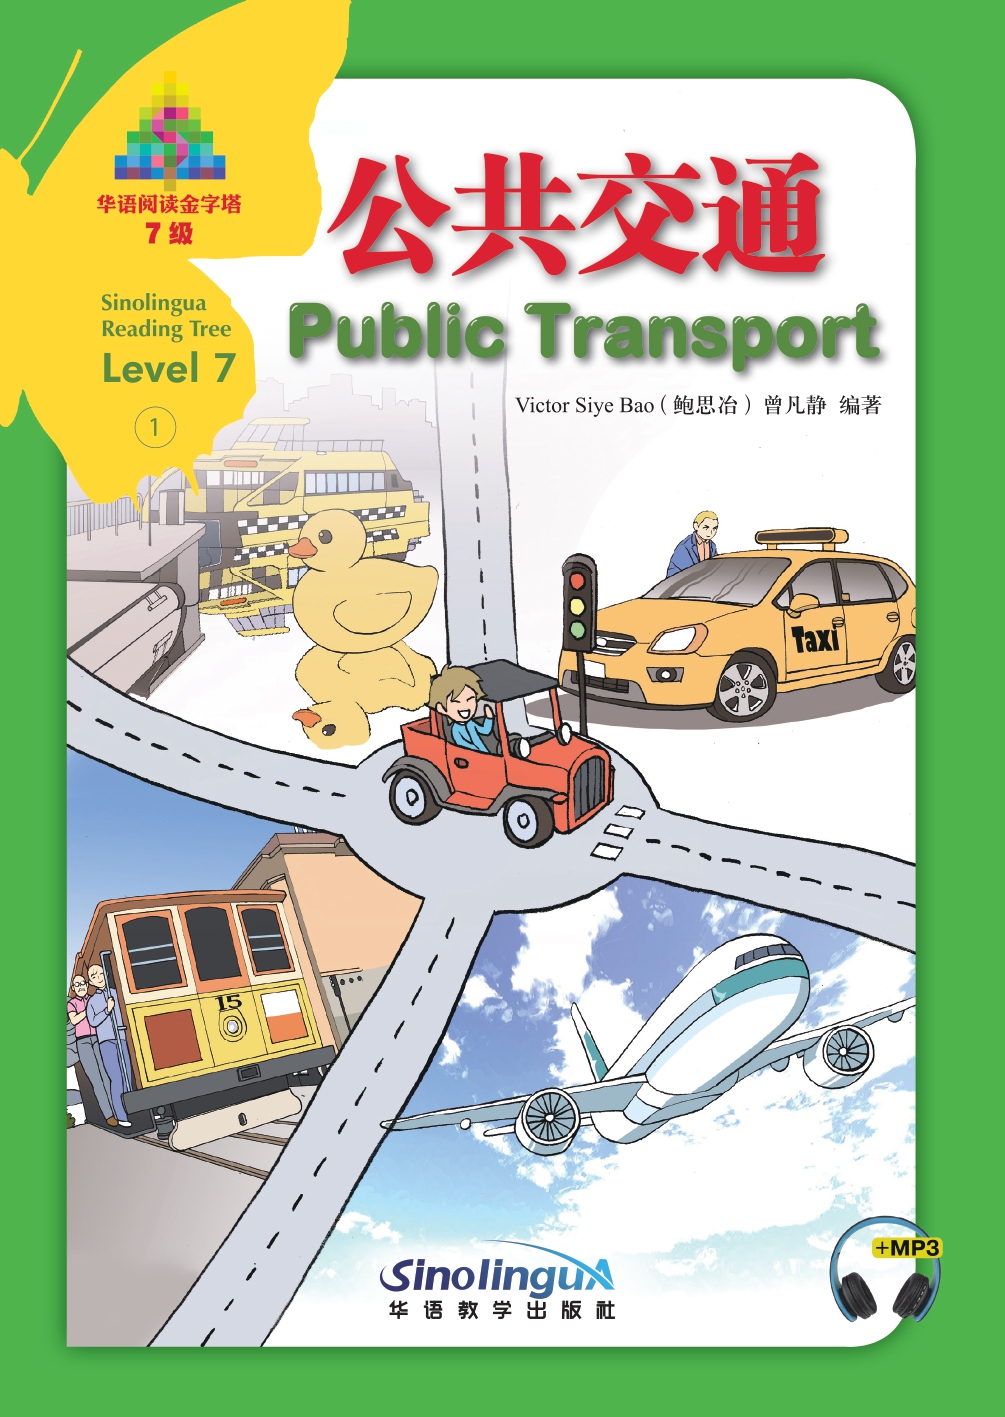 Sinolingua Reading Tree  Level 7 ① Public Transport